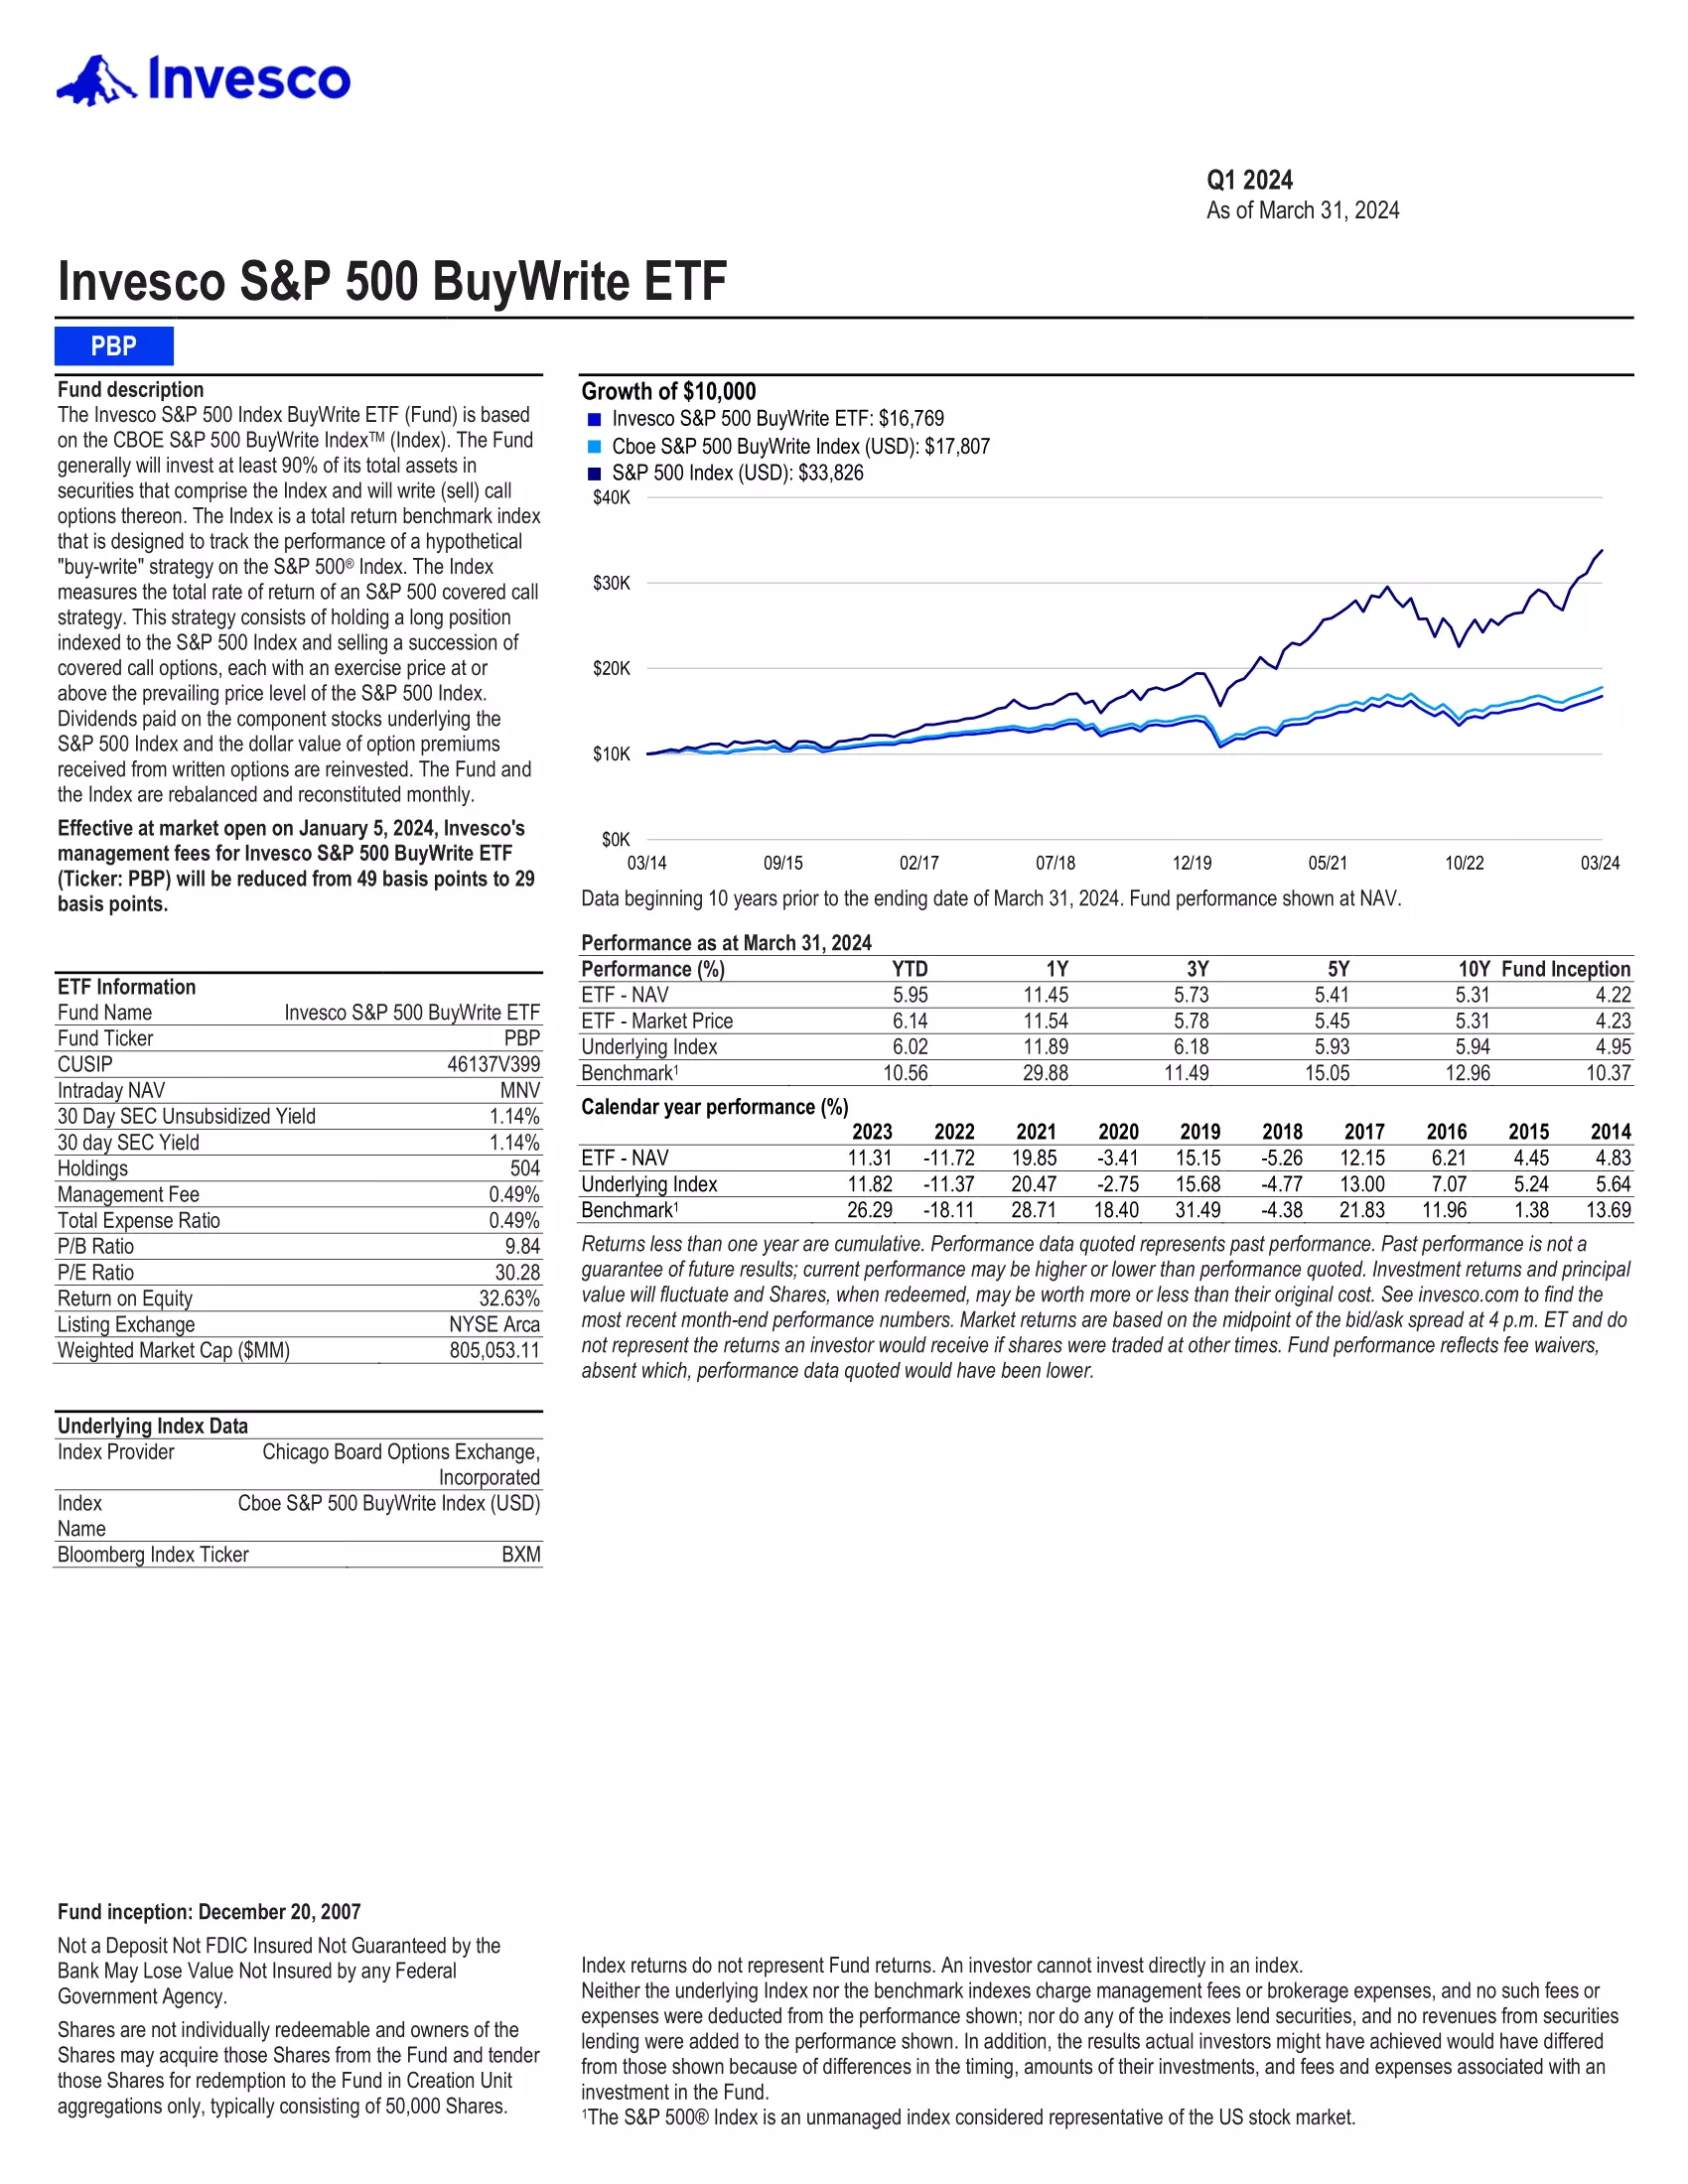 PBP: Invesco S&P 500 BuyWrite ETF